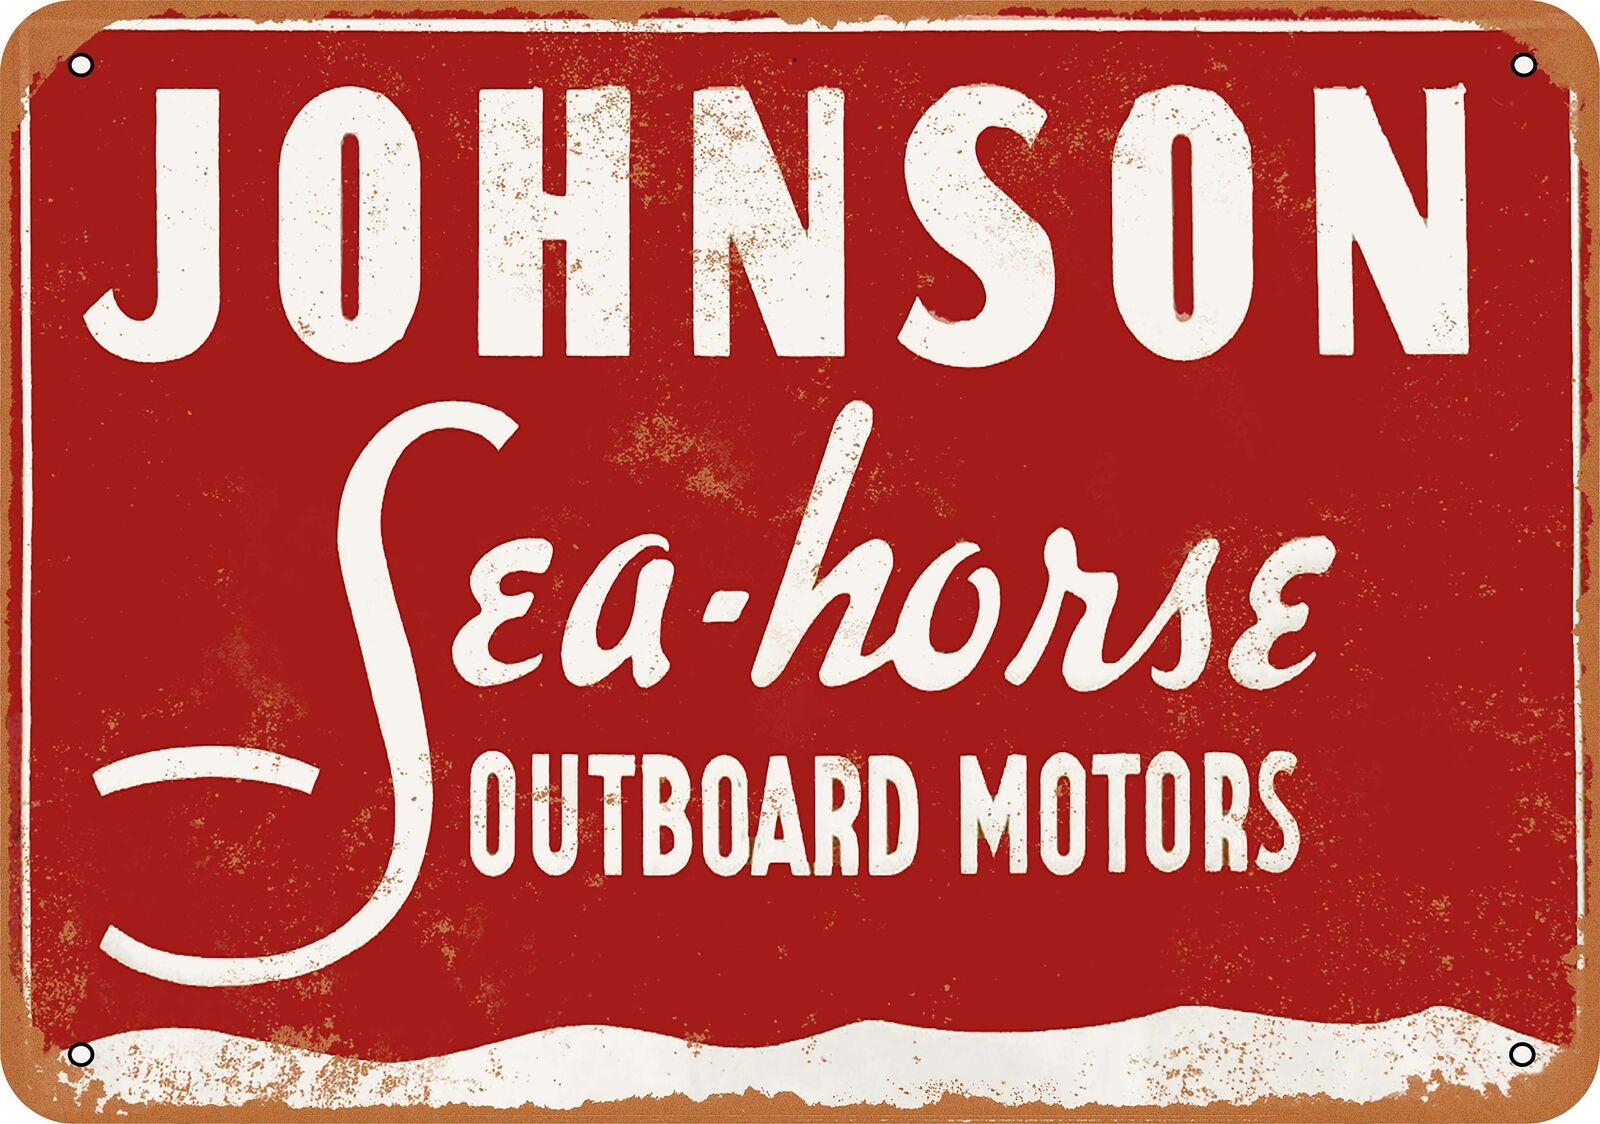 Metal Sign - 1958 Johnson Sea-Horse Outboard Motors -- Vintage Look